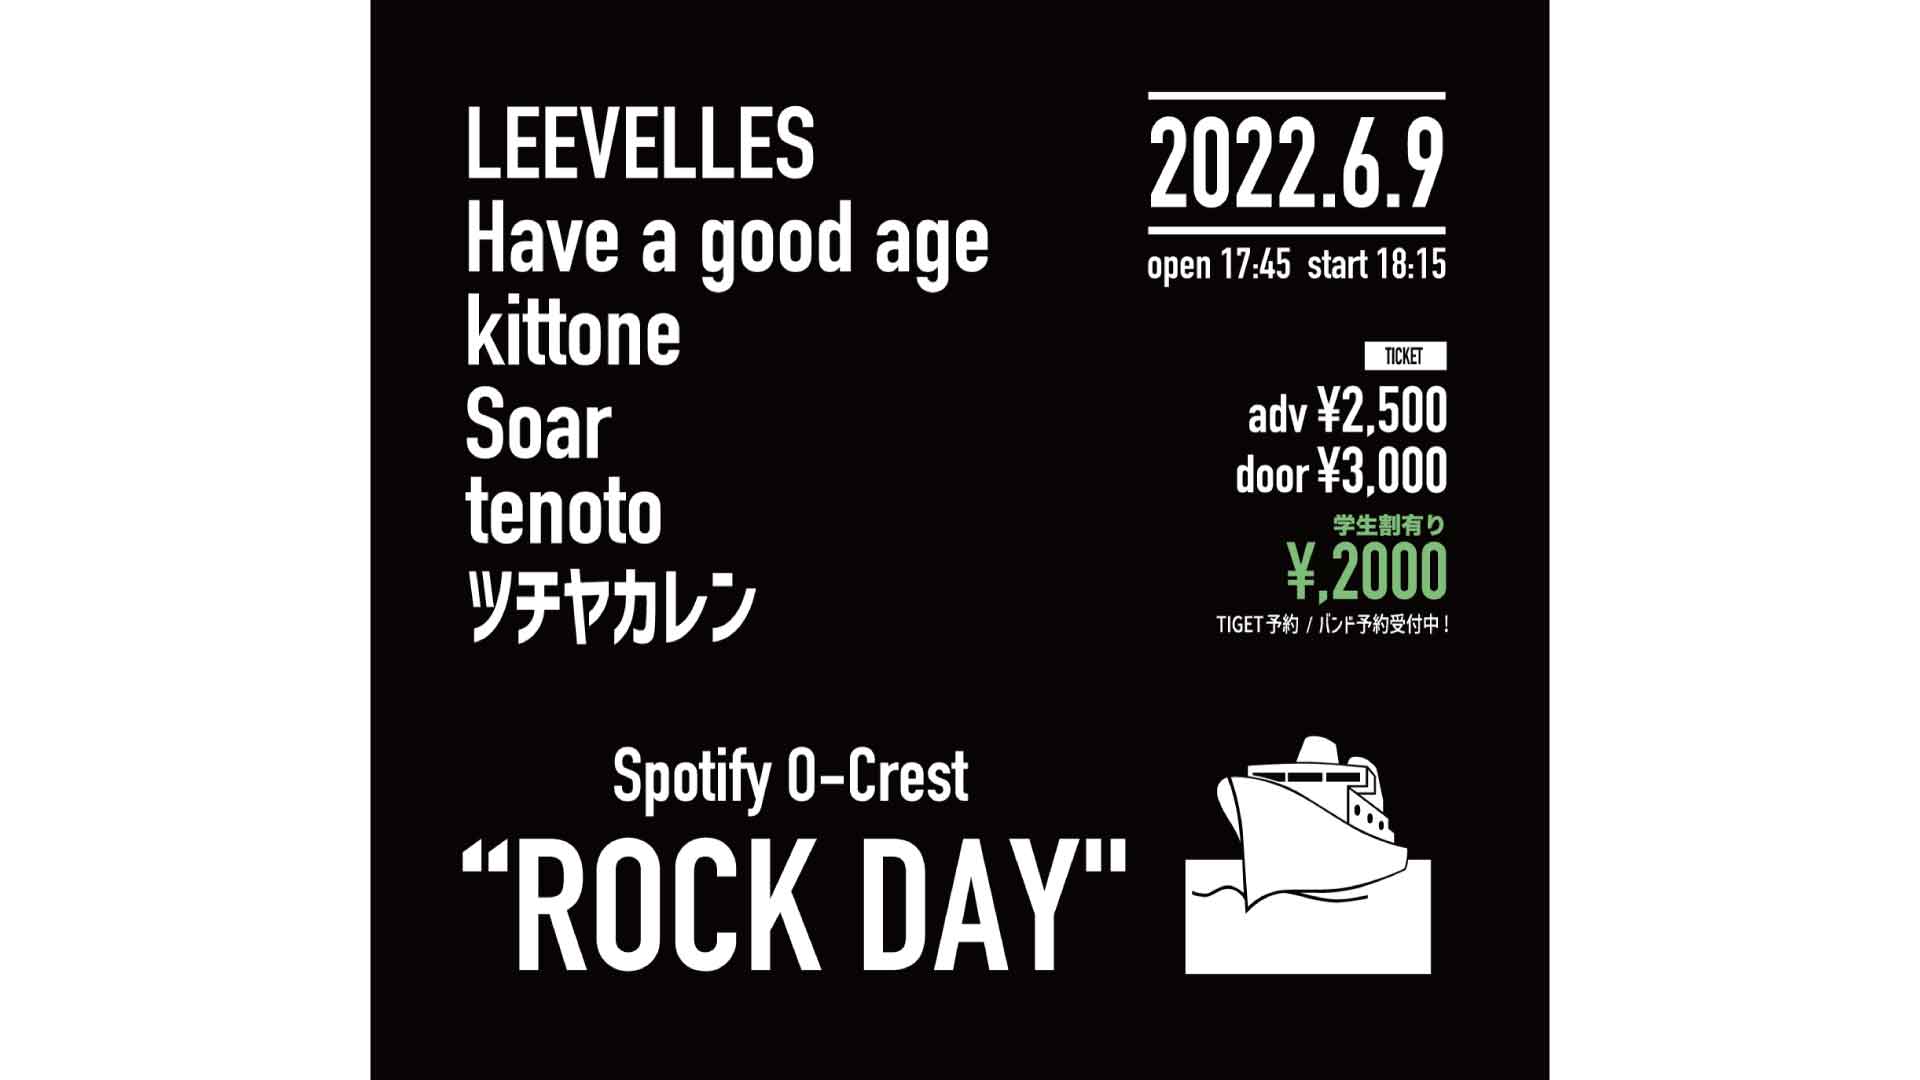 LEEVELLES Have a good age kittone Soar tenoto ツチヤカレン_22/6/9